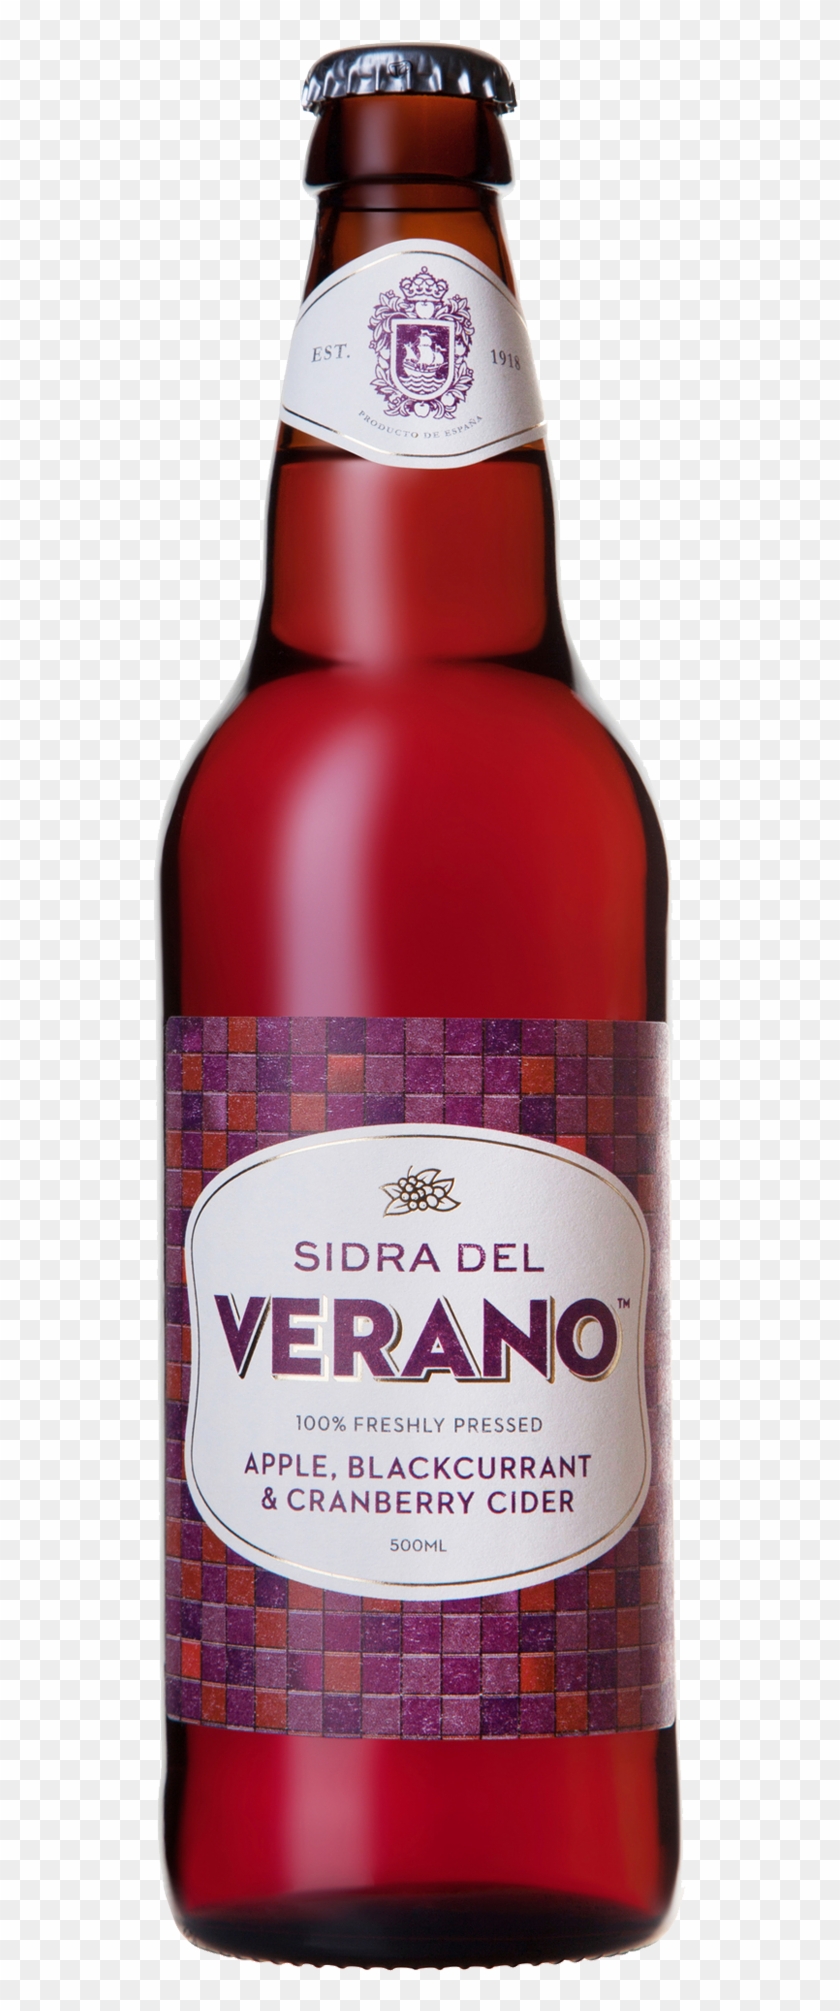 Sidra Del Verano Apple, Blackcurrant & Cranberry Cider - Beer Bottle Clipart #2258294